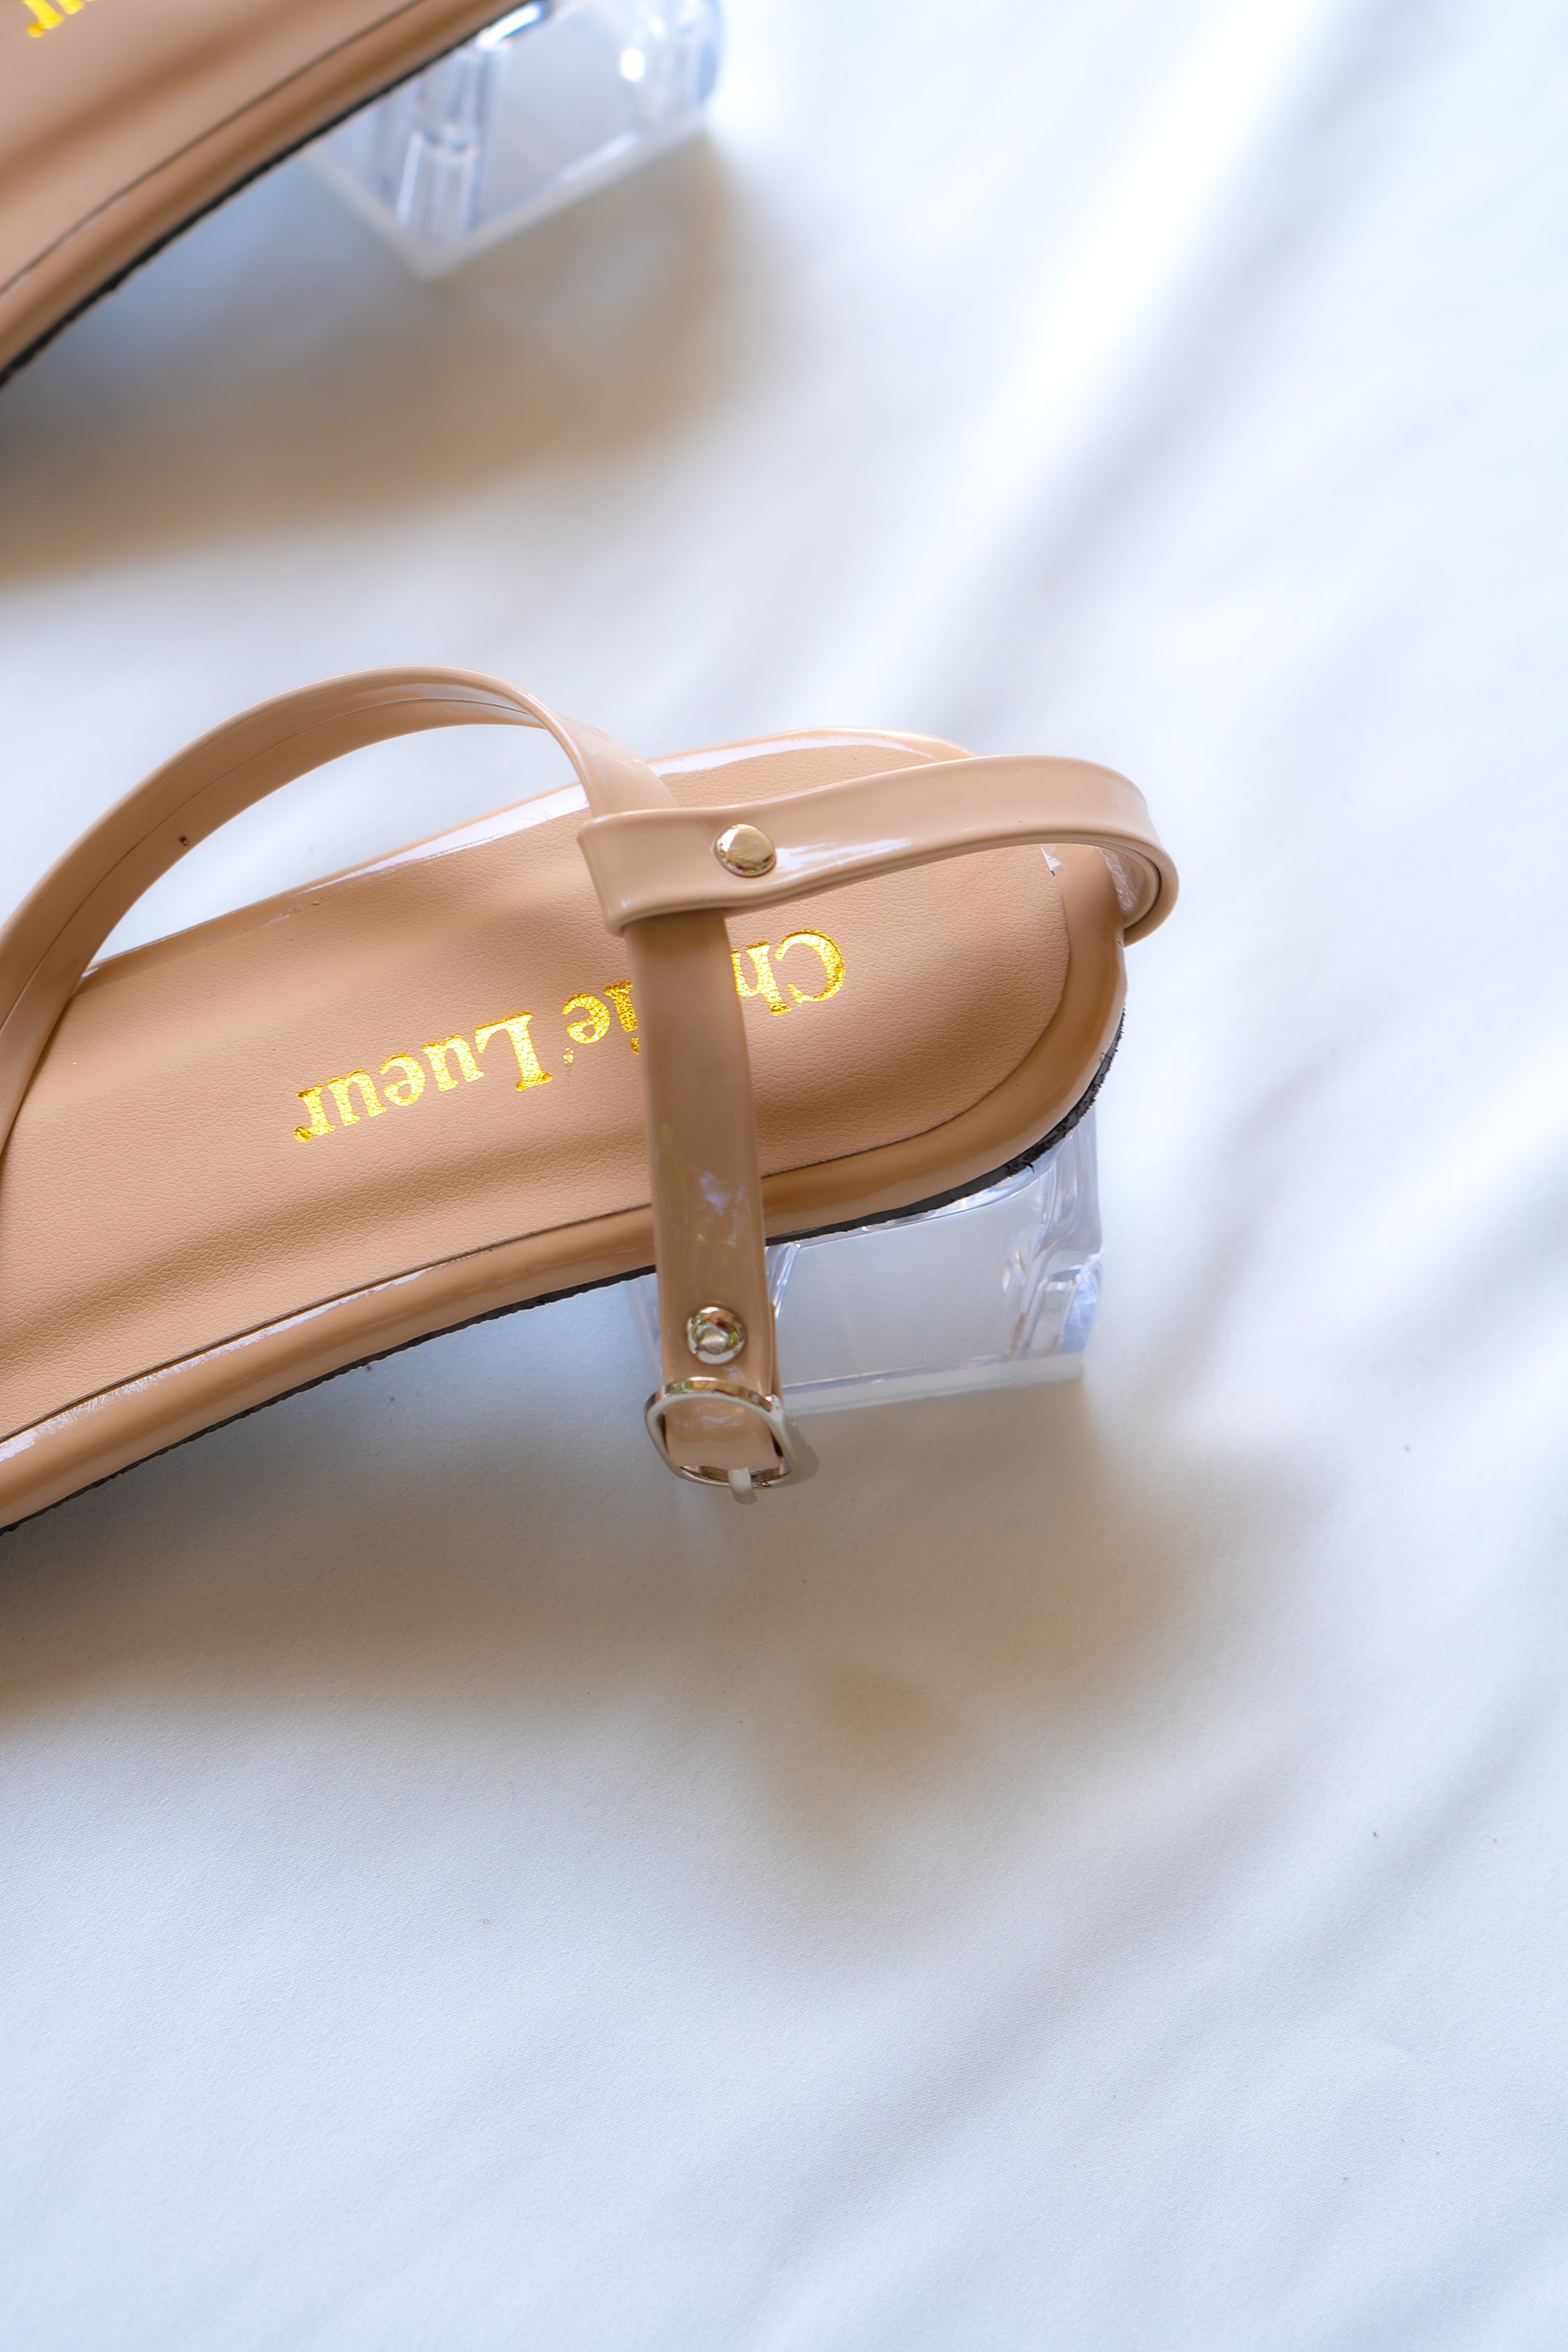 Nude Simple strap 2 inch transparent heel